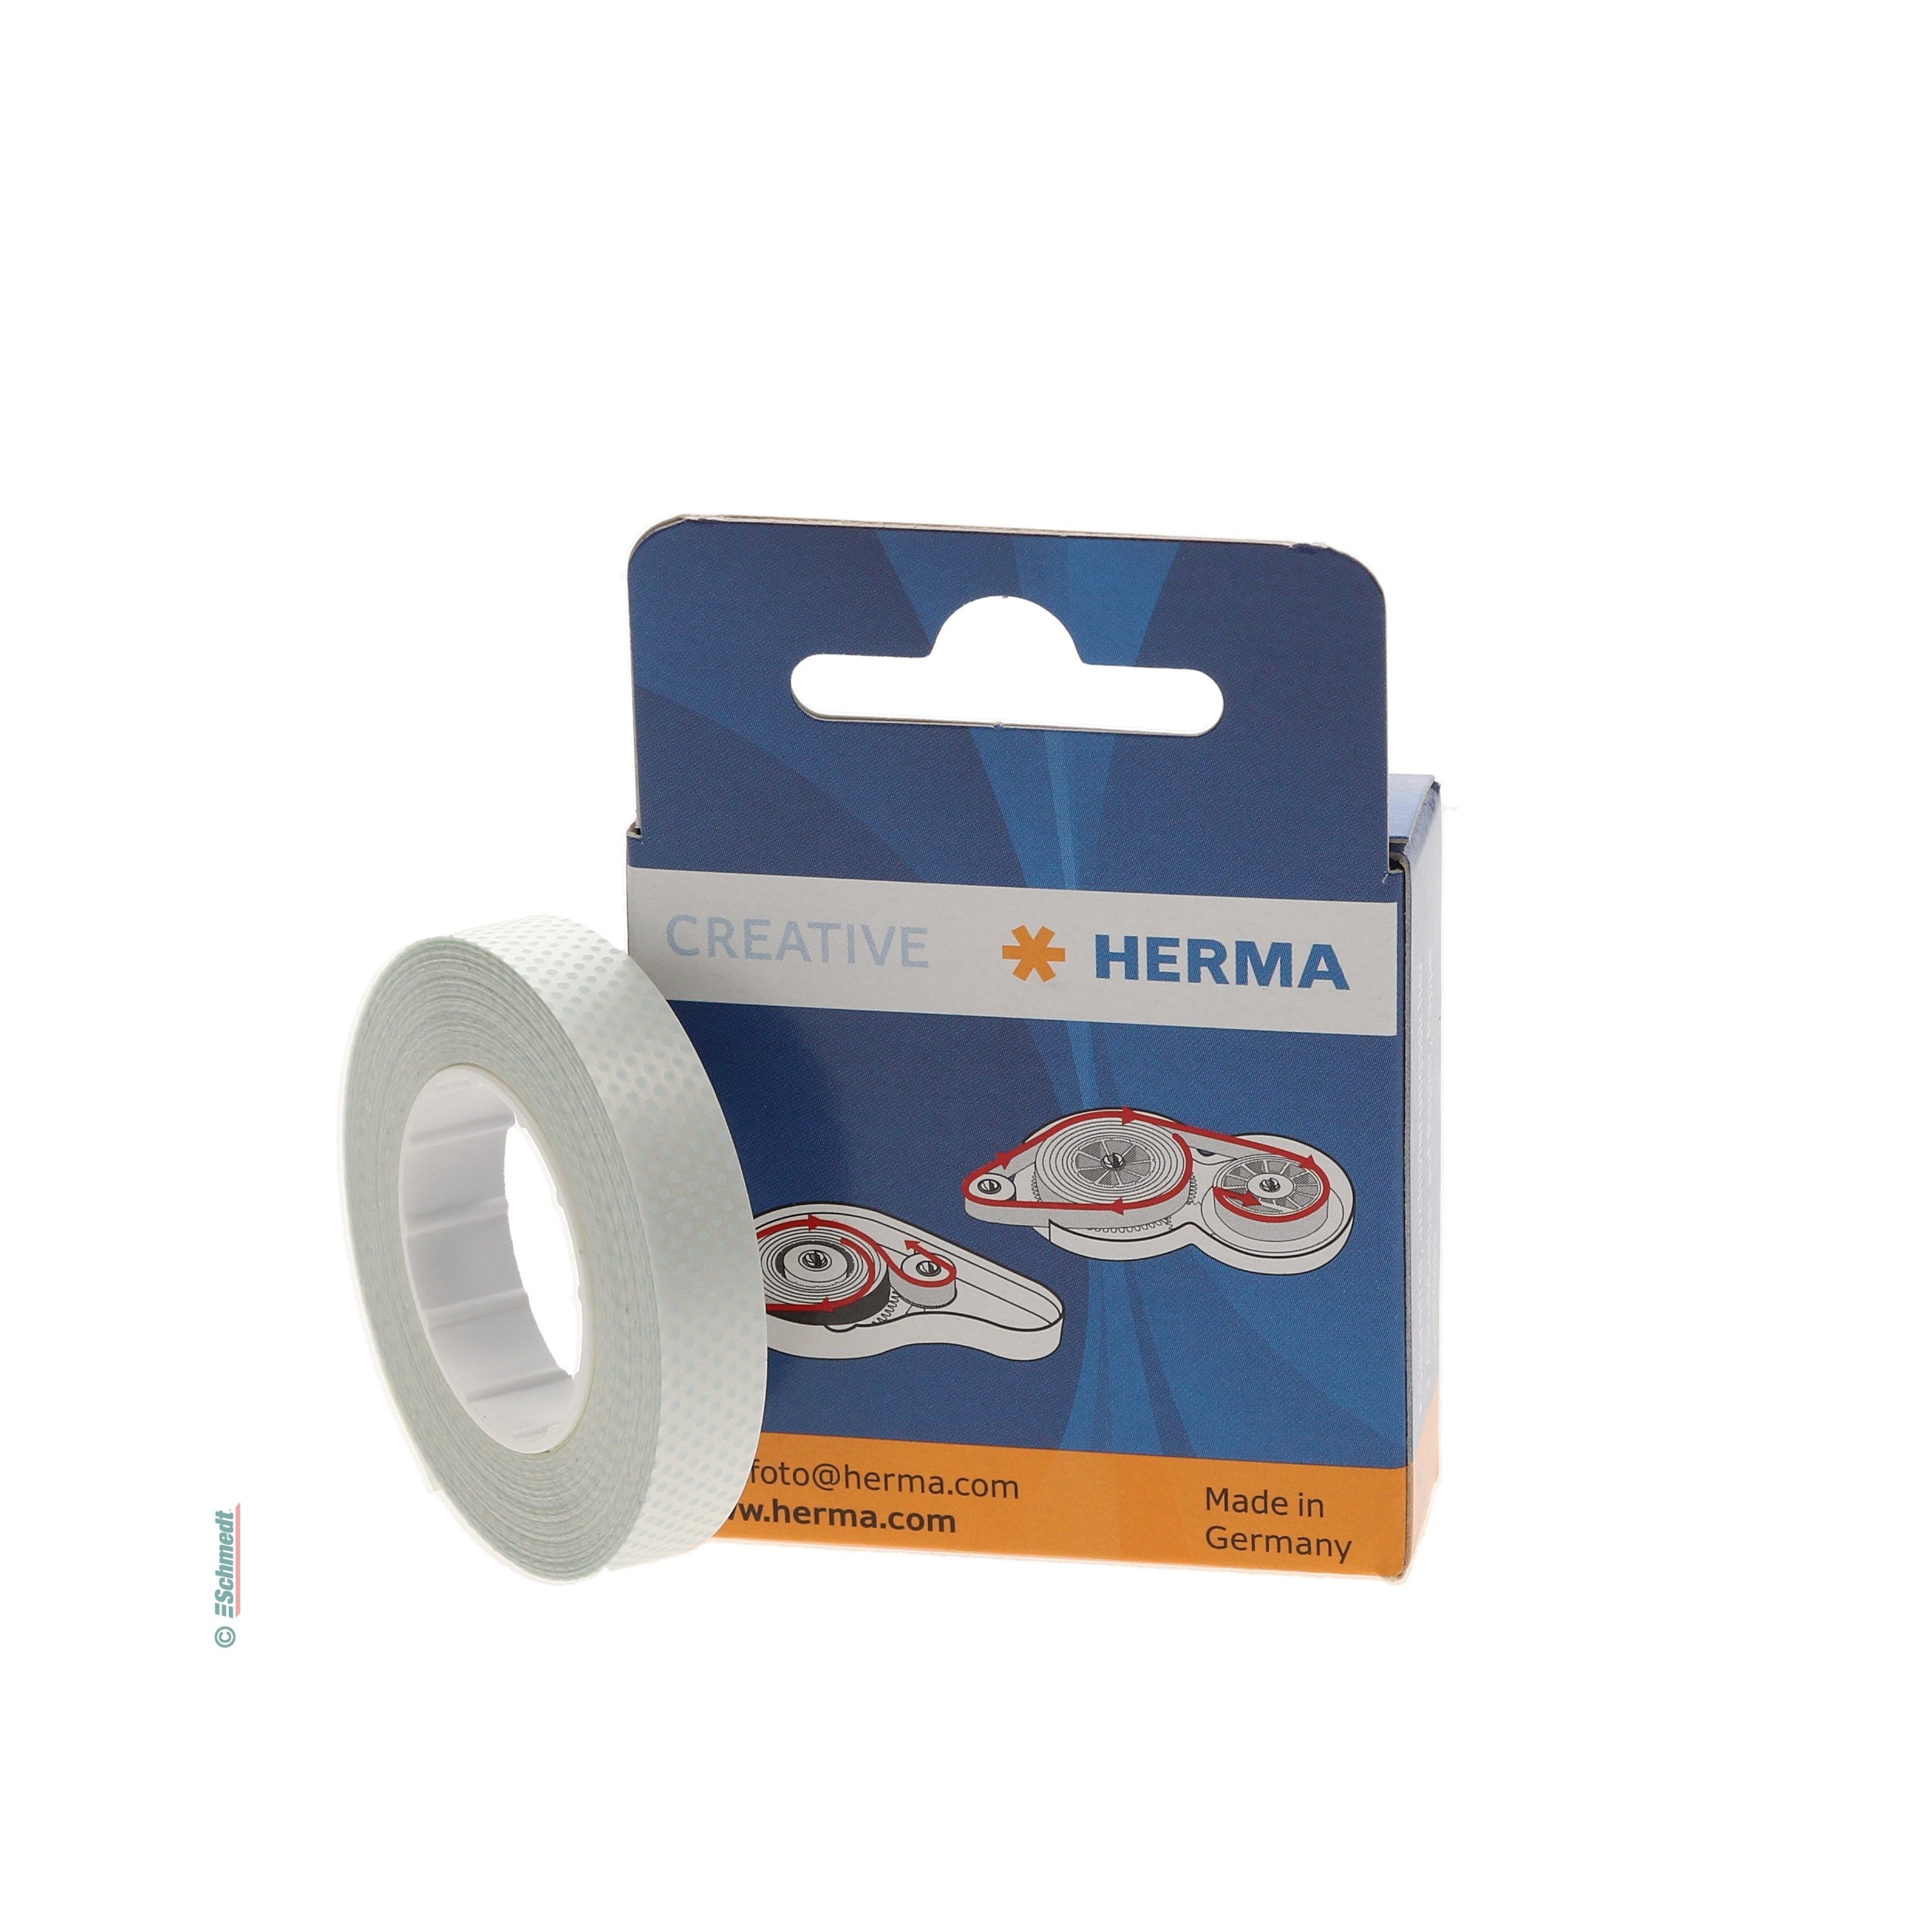 Hermafix transfer - refill roll - spot gumming on roll  - 9 mm x 15 mts - clean fixing of paper, cardboard, plastic film etc.... - image-1